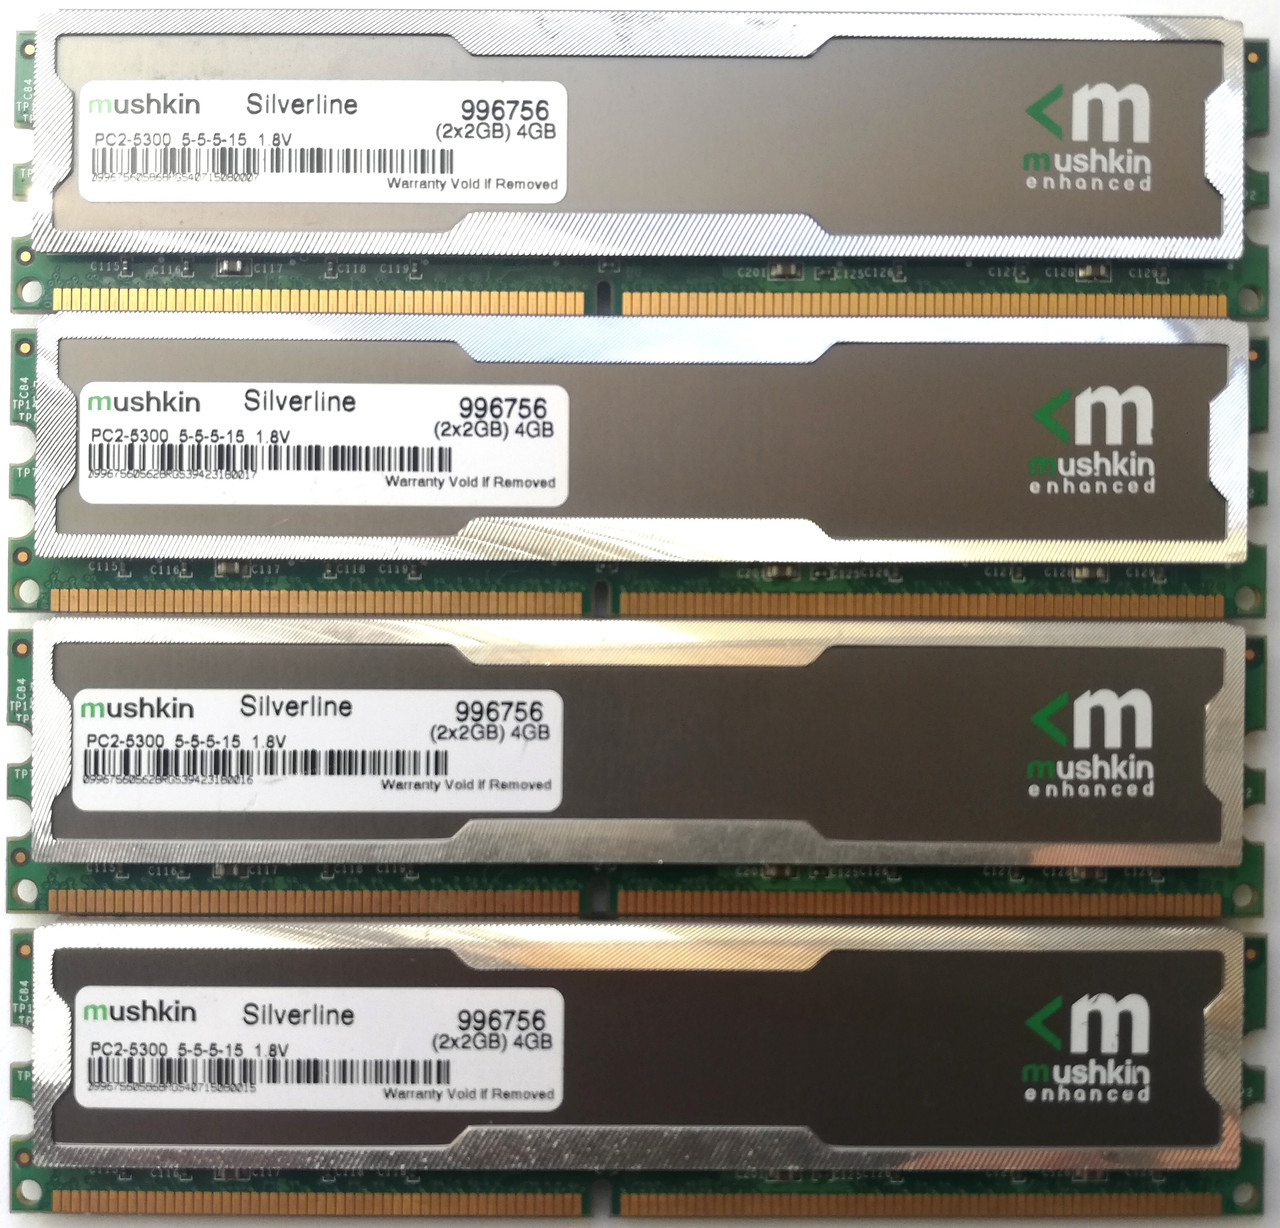 Комплект игровой оперативной памяти Mushkin Silverline DDR2 8Gb (4*2Gb) 667MHz PC2 5300U CL5 (996756) Б/У, фото 1